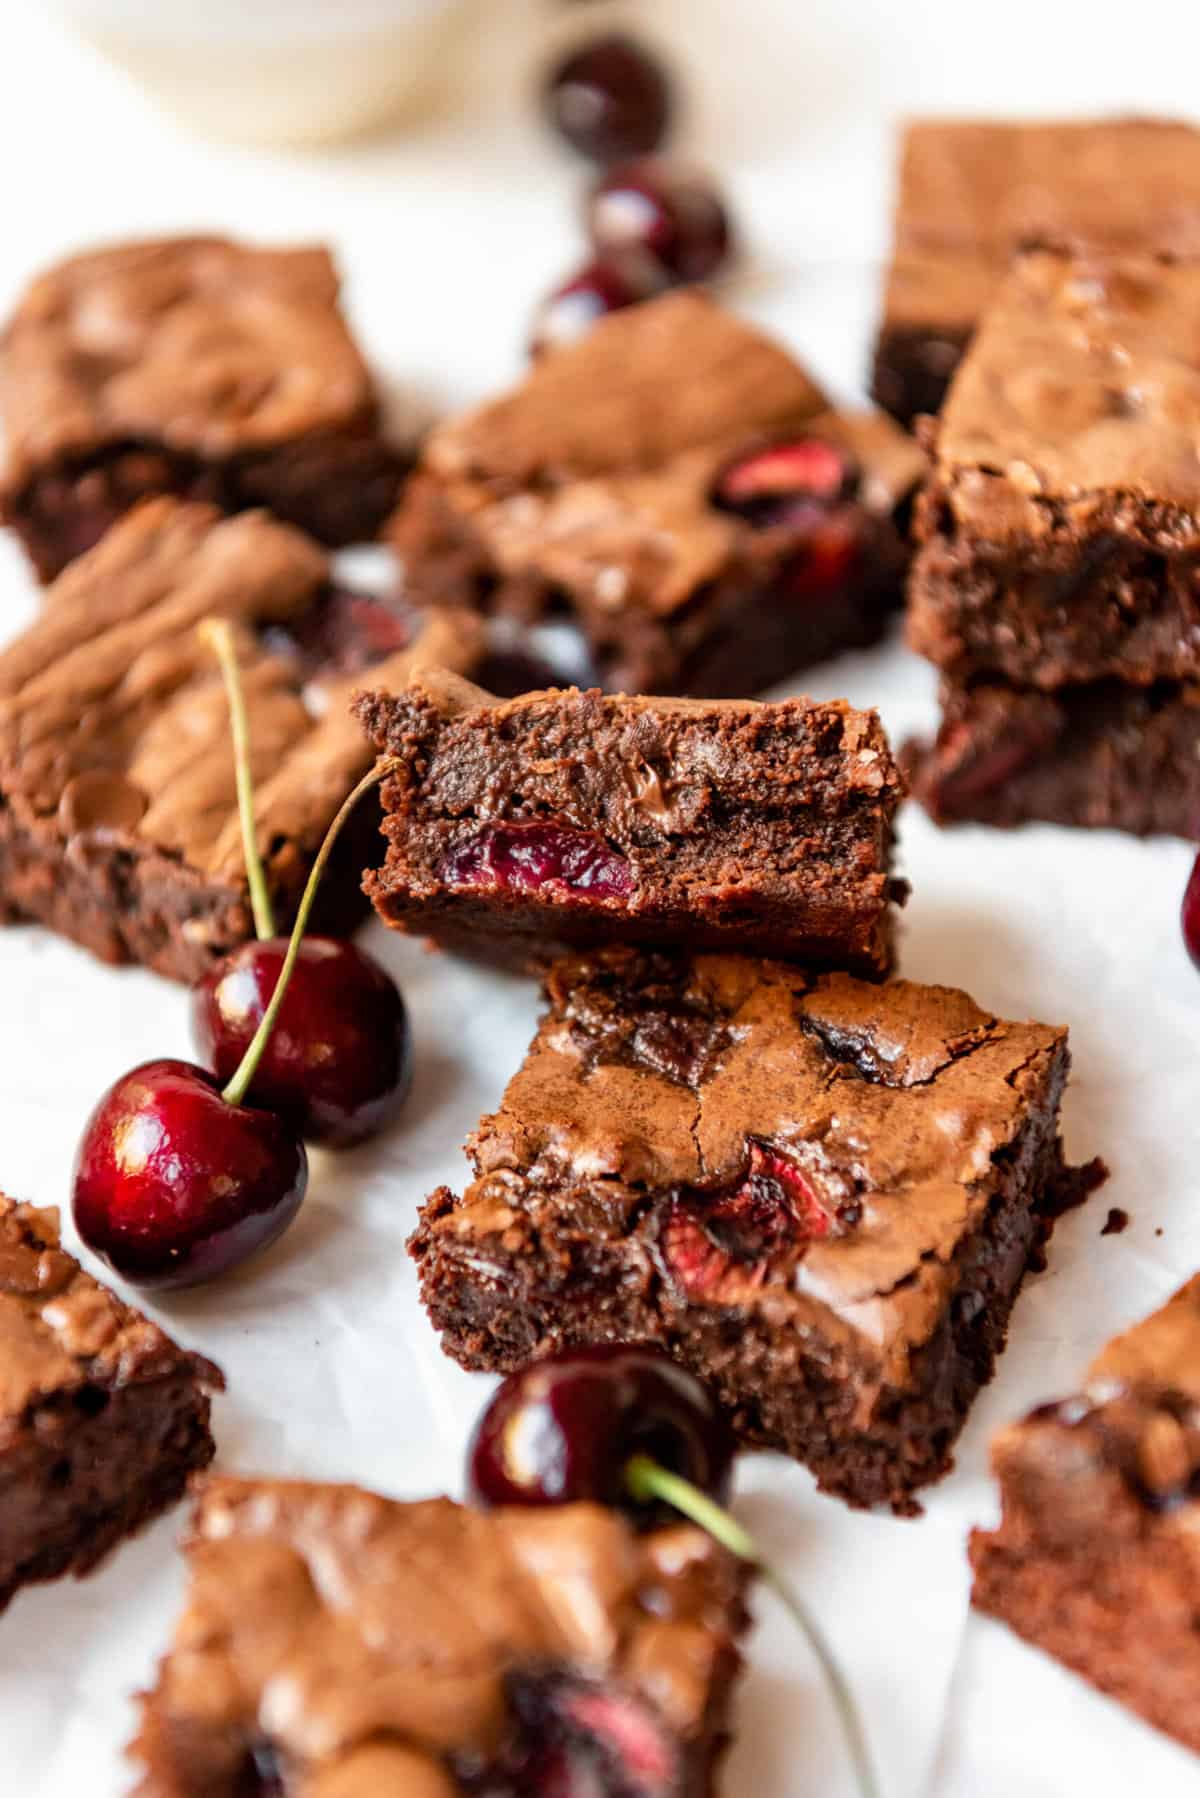 An image of cherry brownies next to fresh cherries.